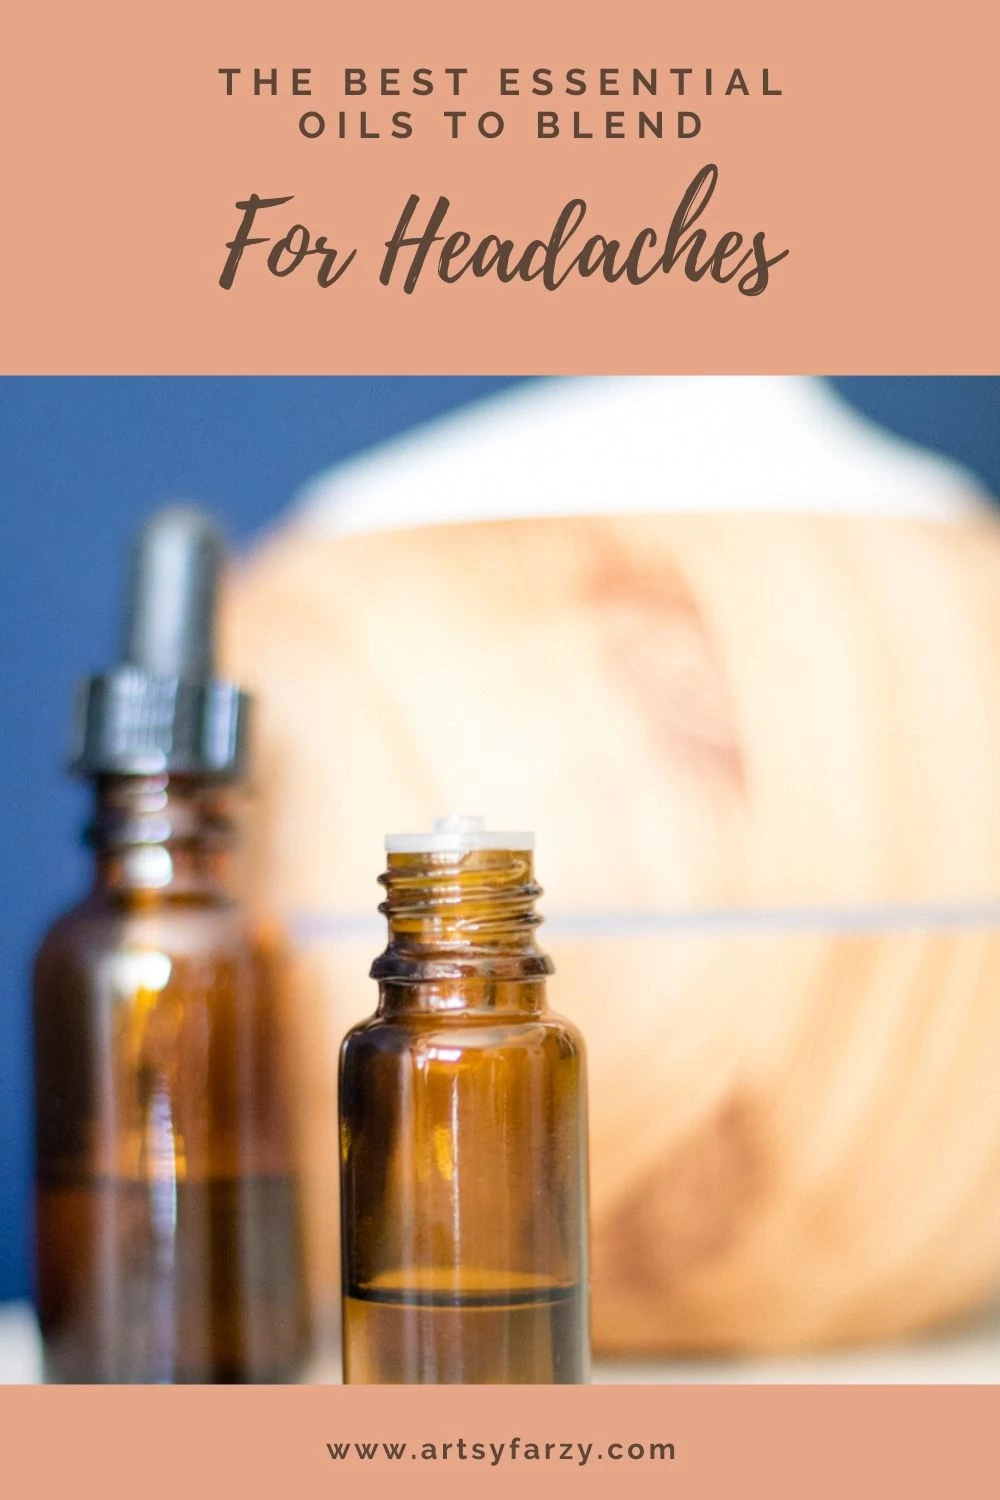 best essential oils to blend for headaches at www.artsyfartzy.com